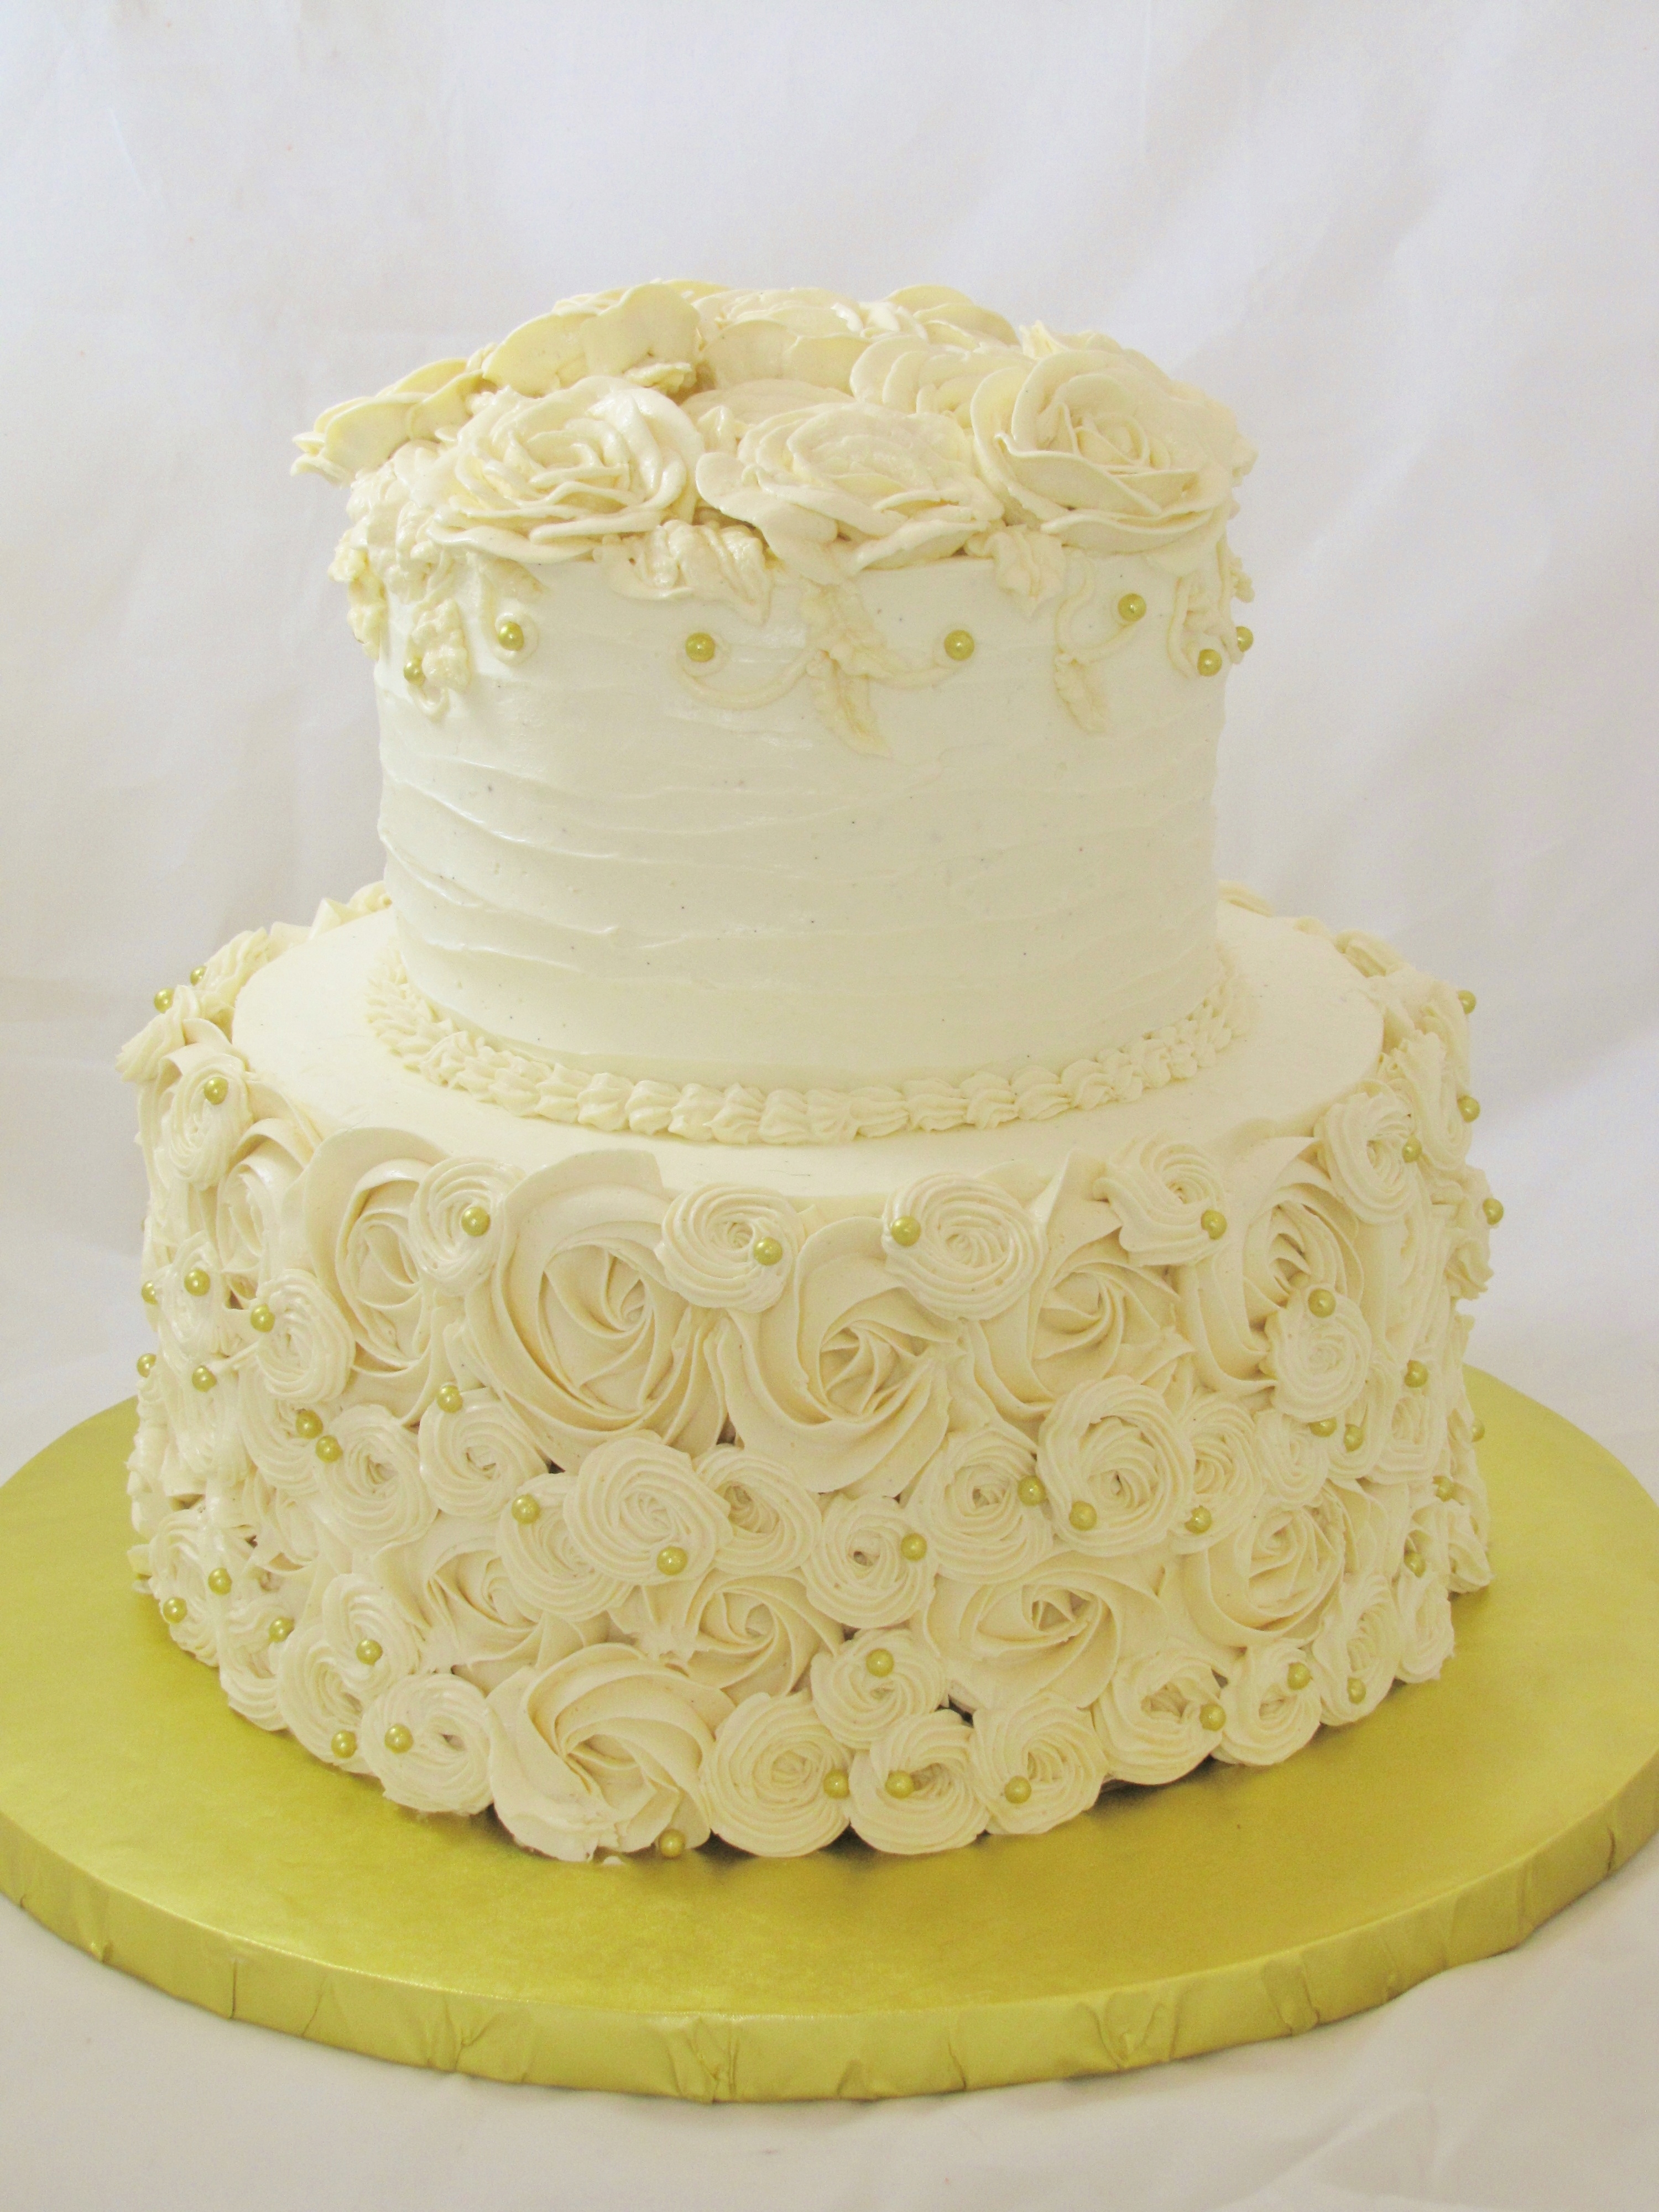 2 Tier Buttercream Wedding Cakes